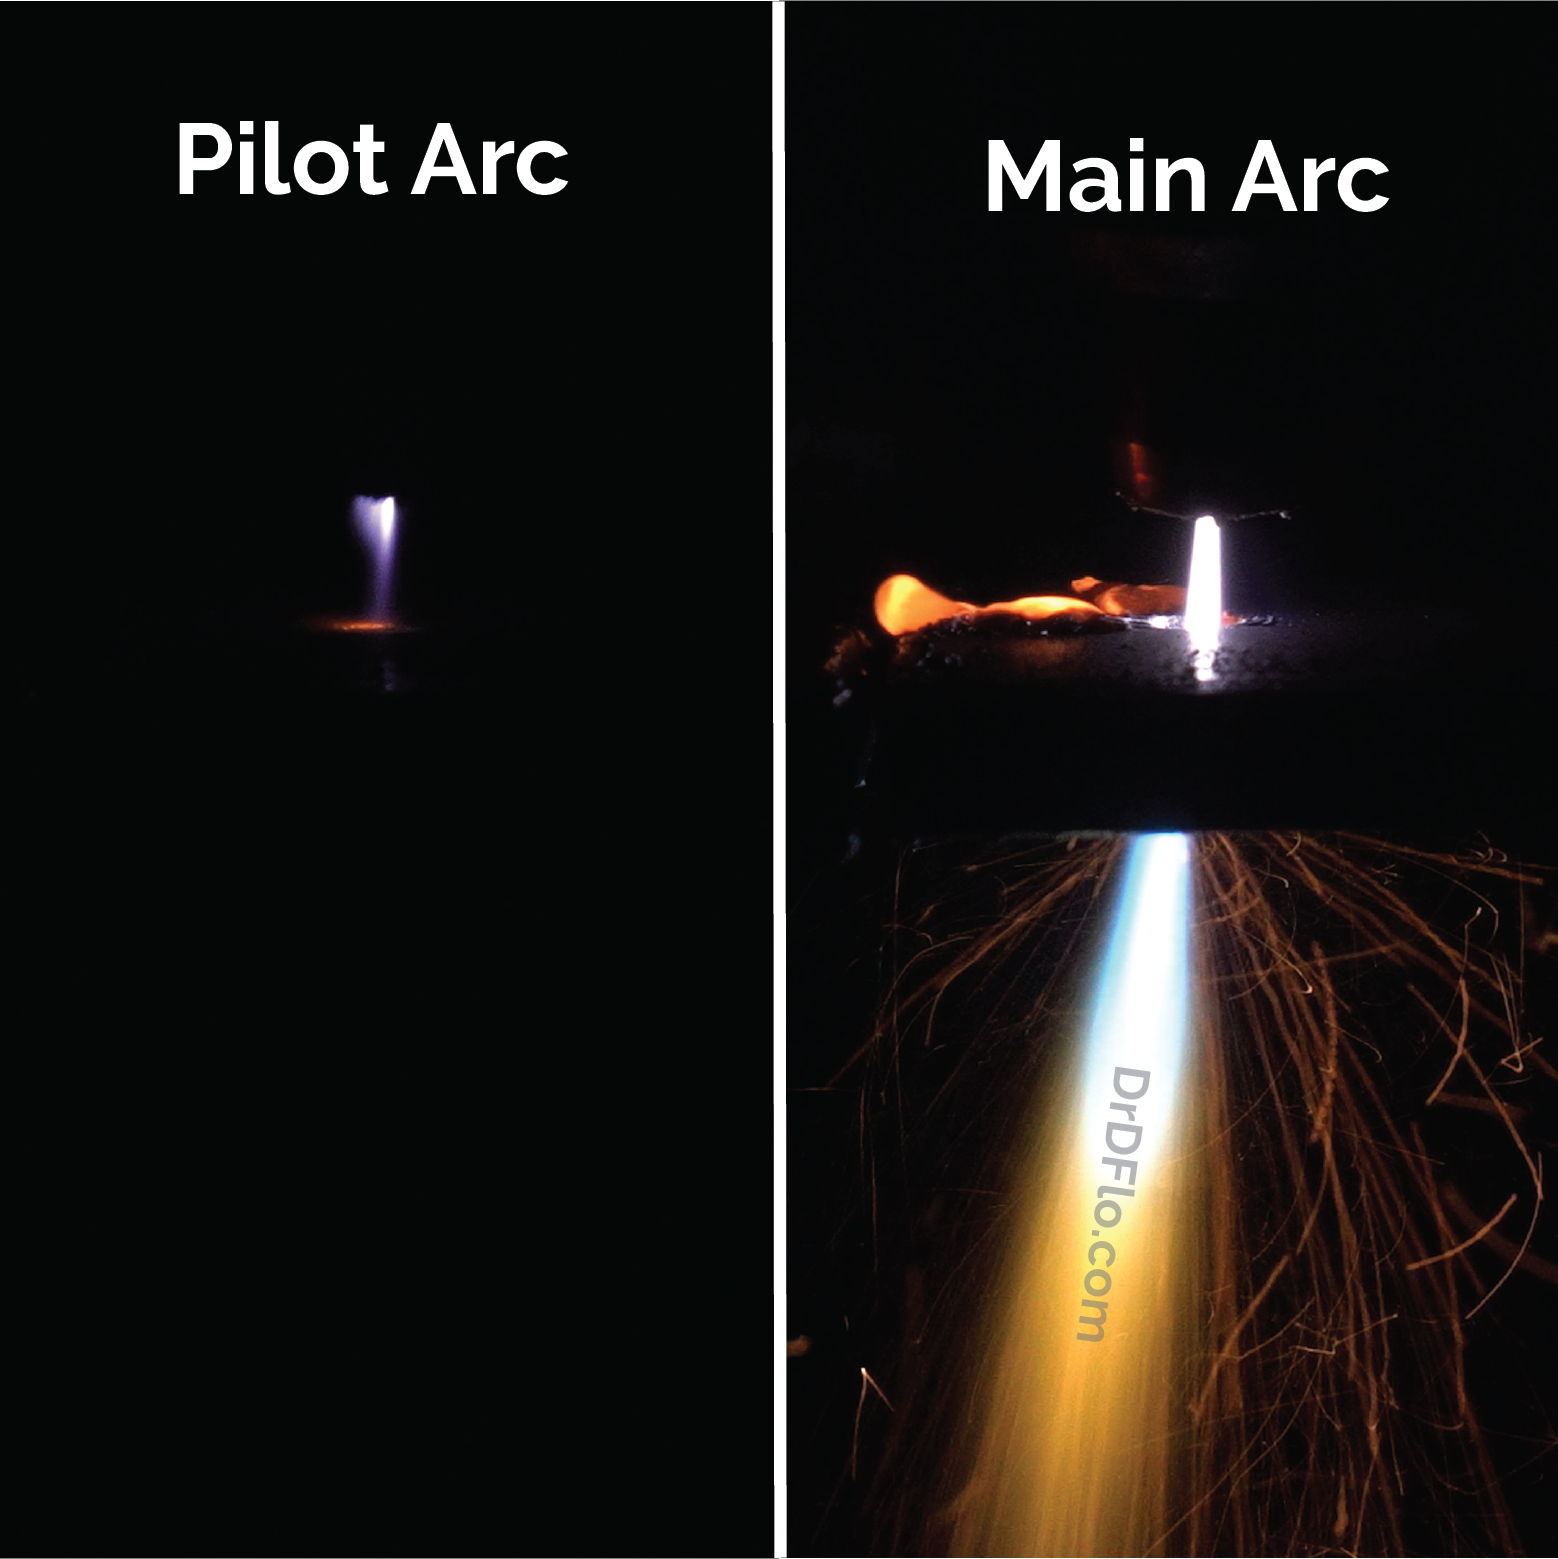 Arc Plasma - an overview